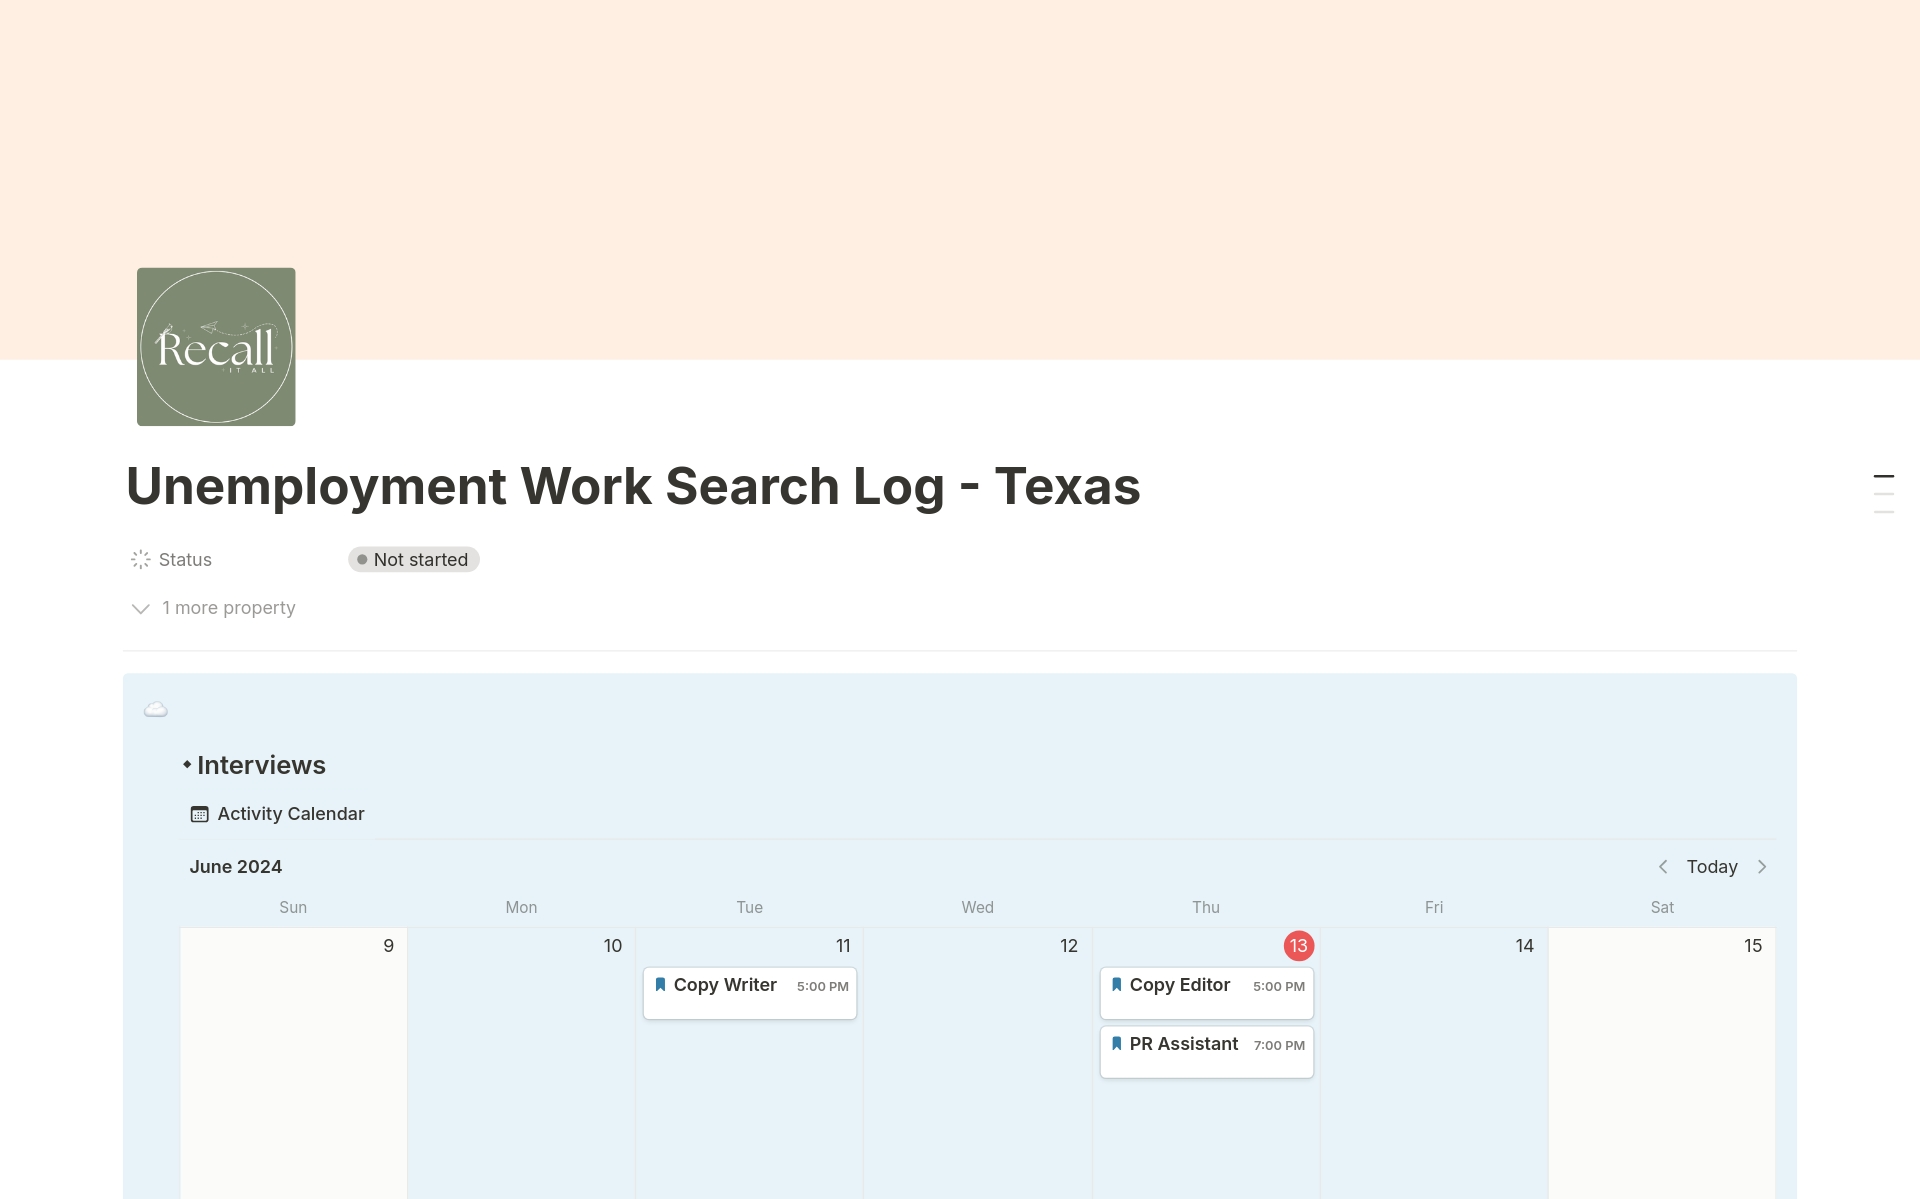 Vista previa de plantilla para Texas Unemployment Work Search Activity Log